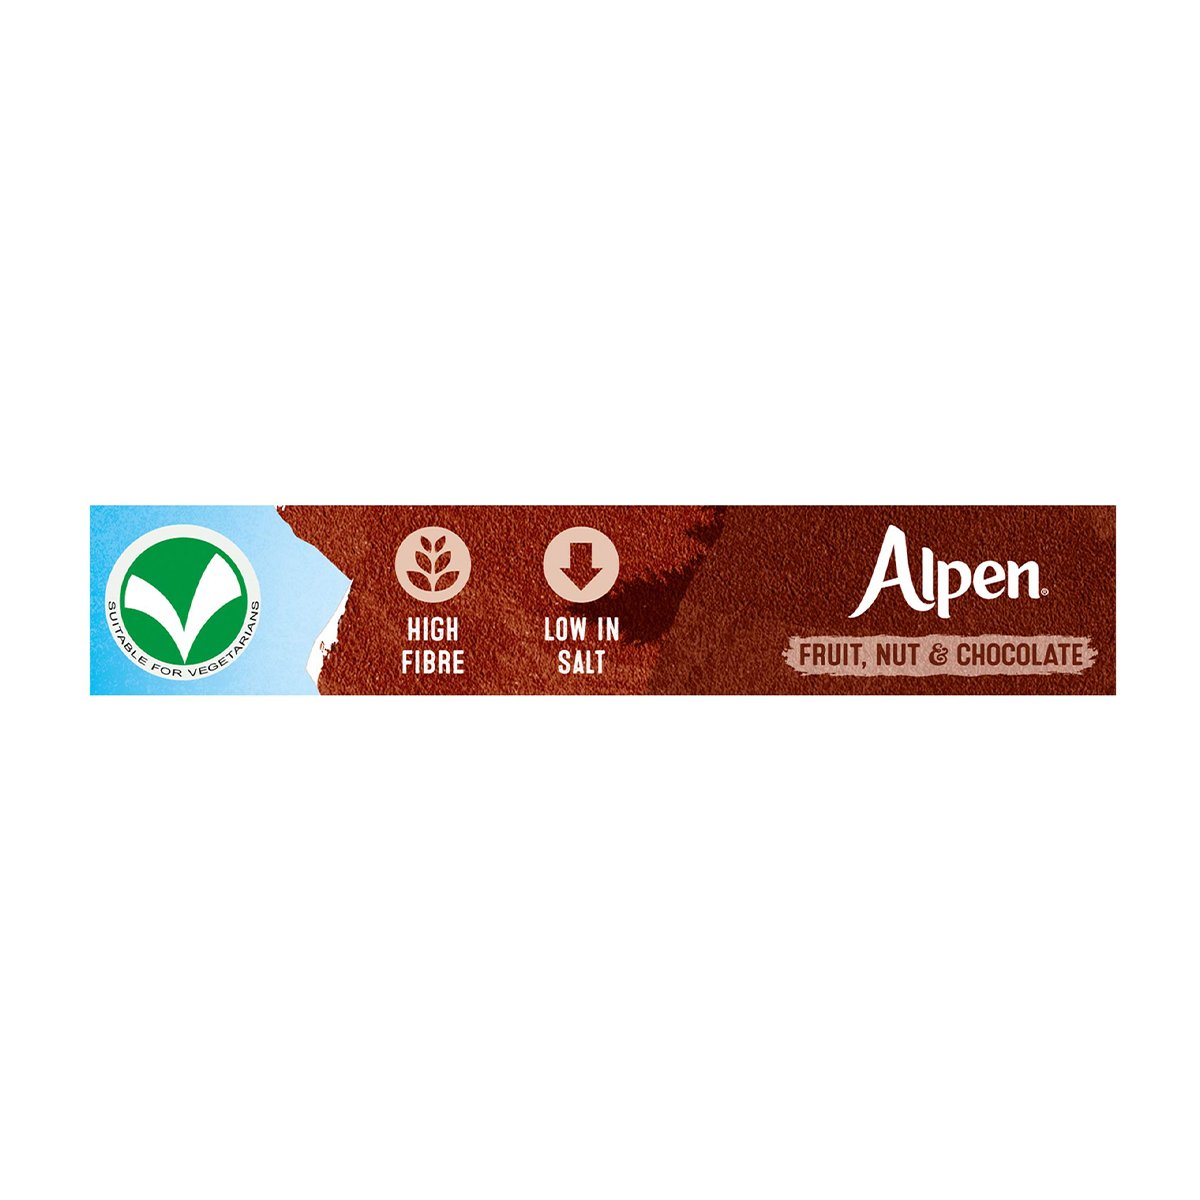 Alpen Fruit & Nut With Milk Chocolate 29 g